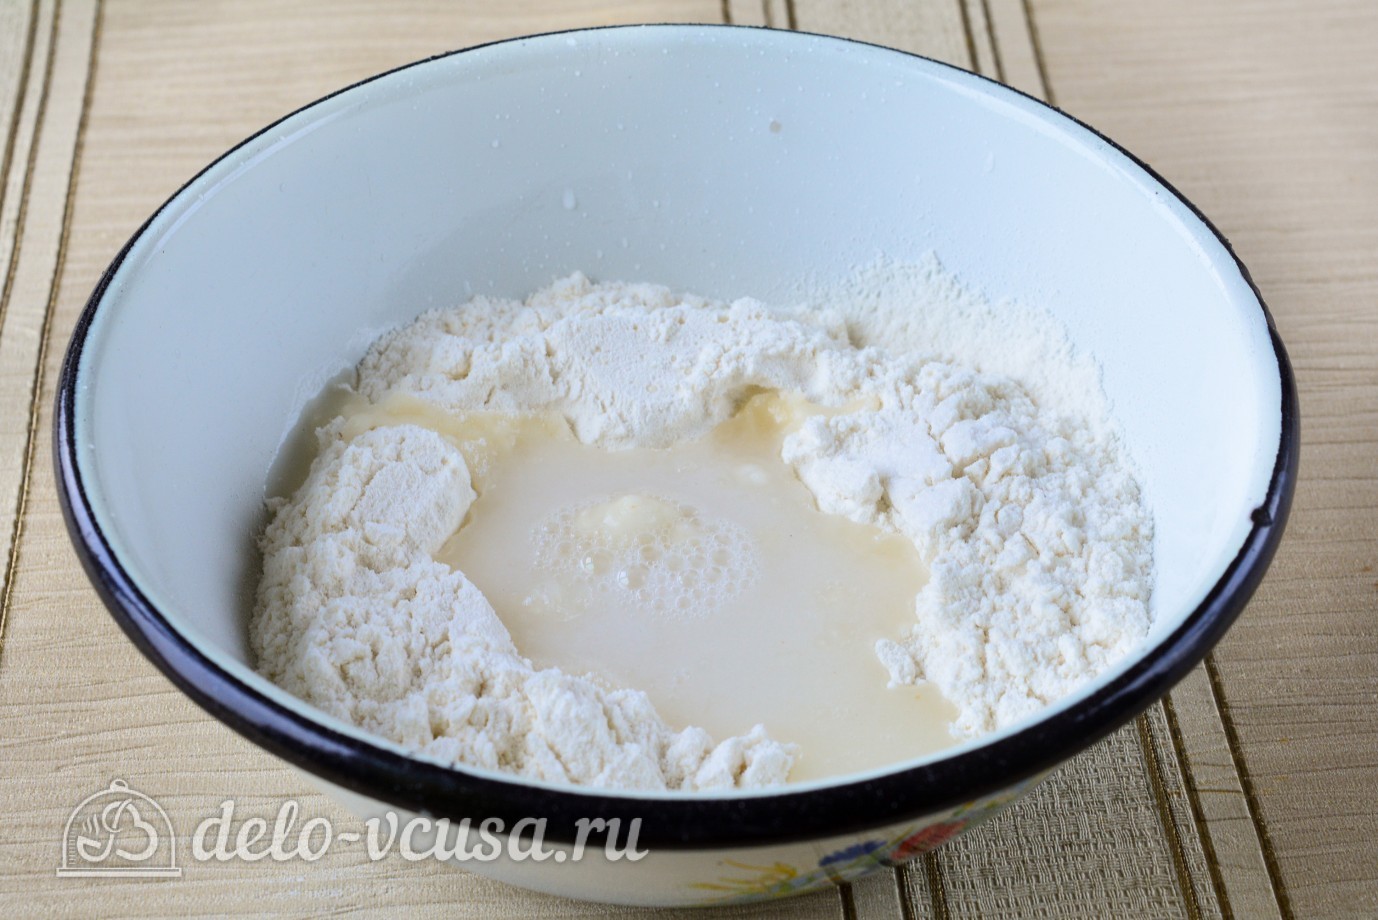 пельменное тесто рецепт на кипятке и раст масле с фото пошагово фото 19